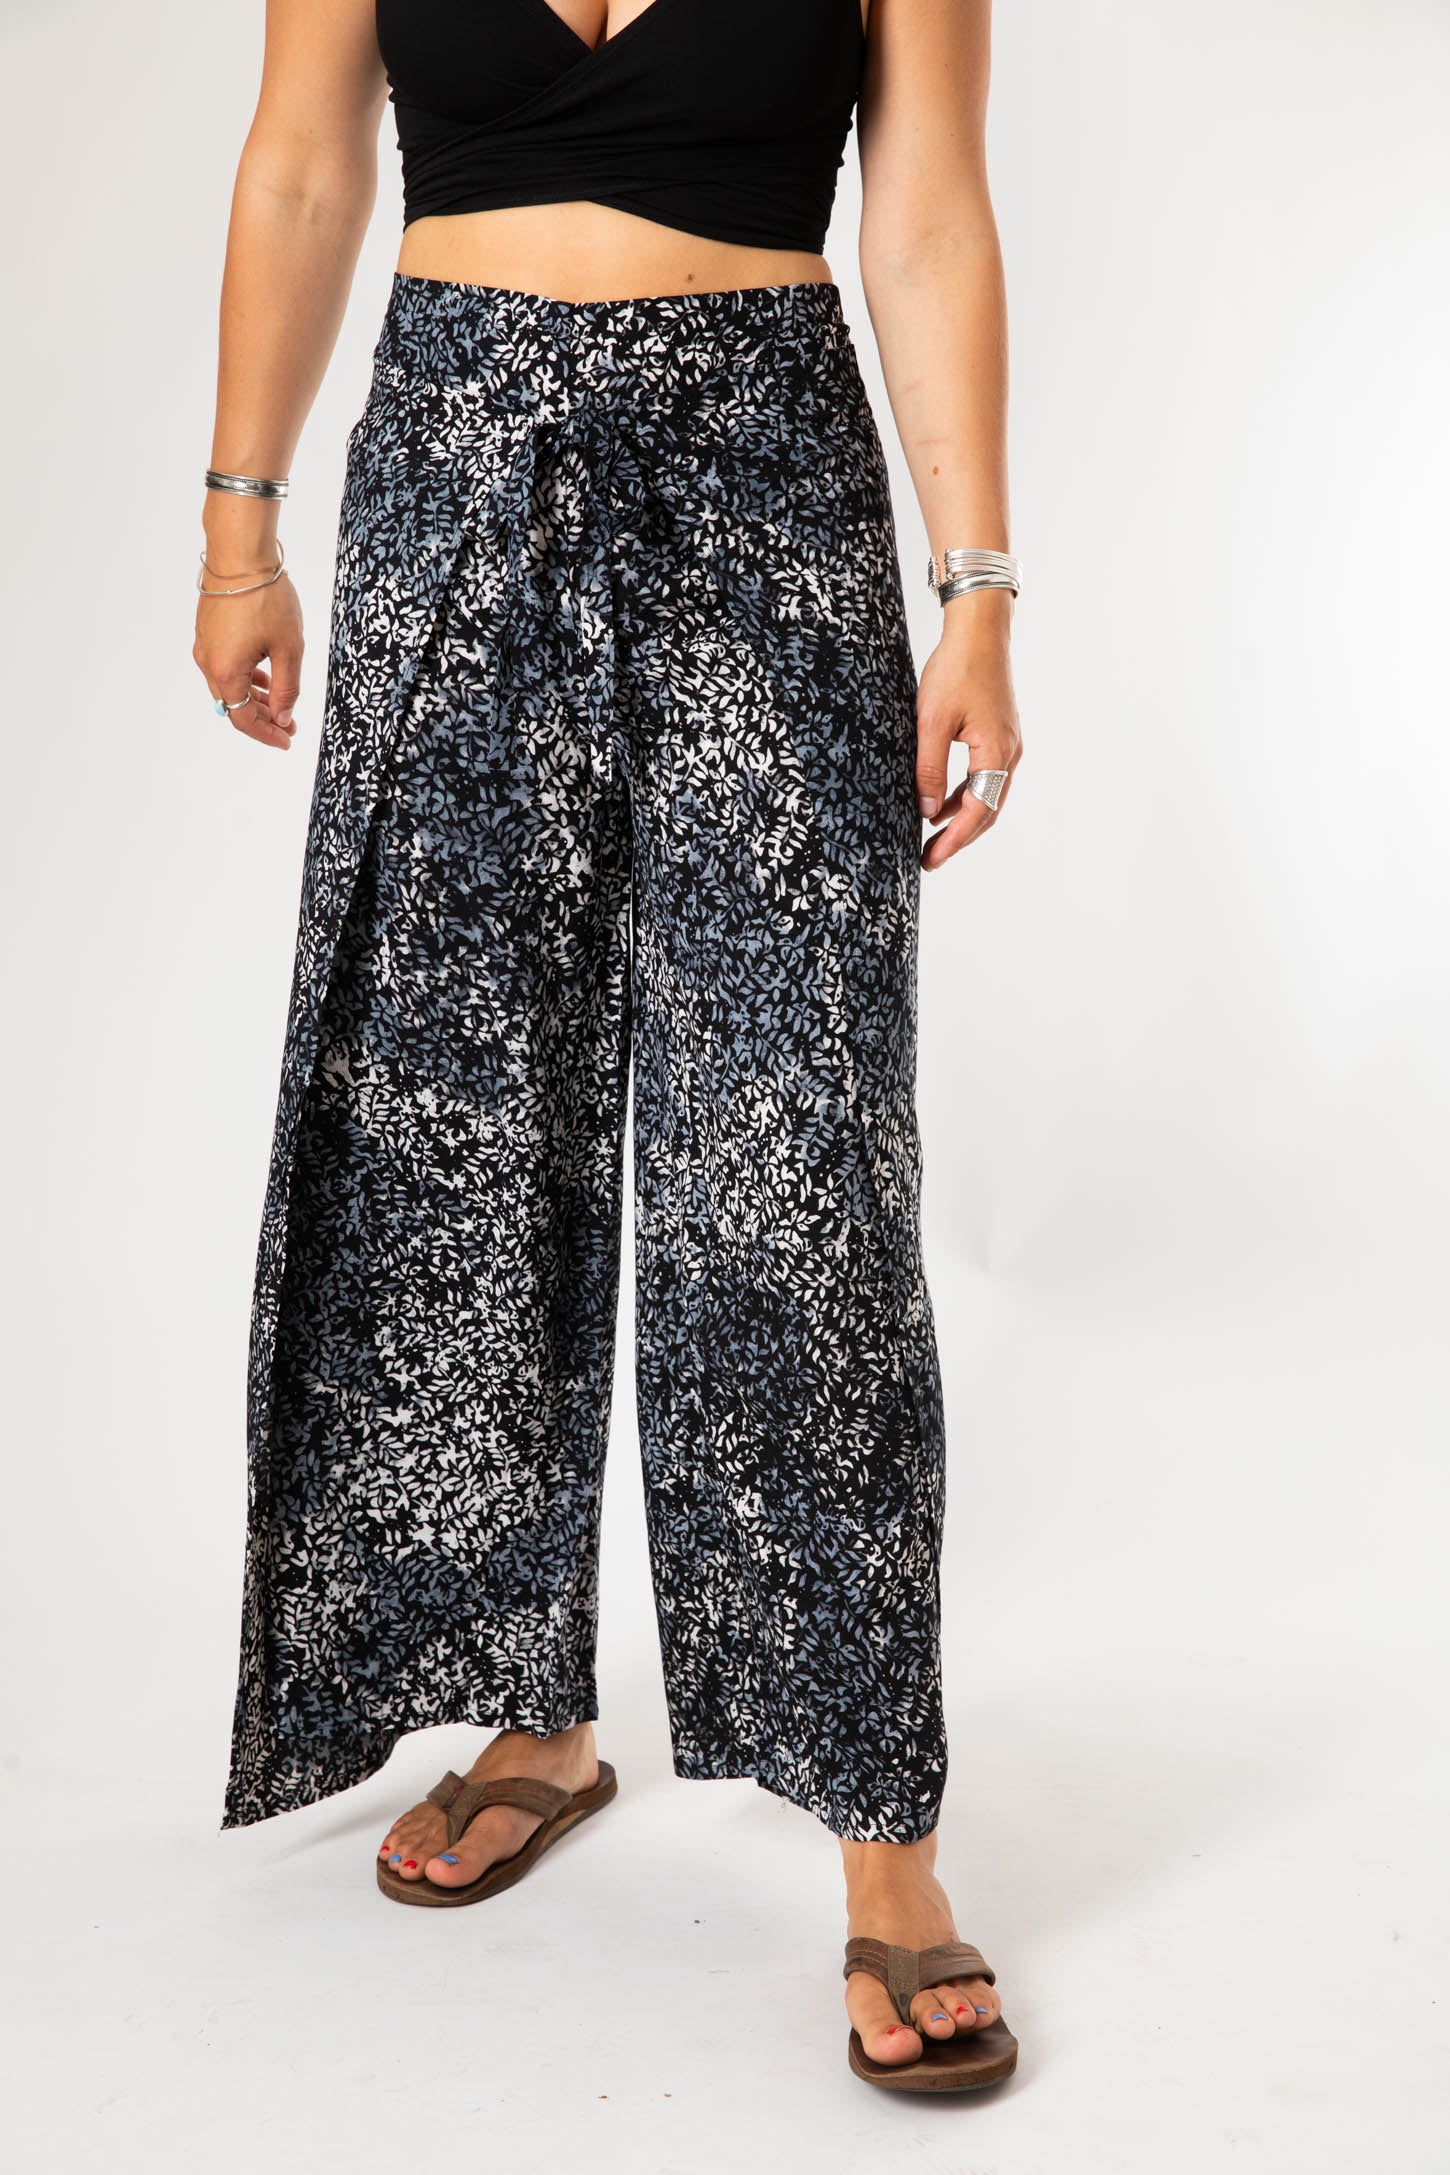 Buy Beige Trousers & Pants for Women by SAM Online | Ajio.com